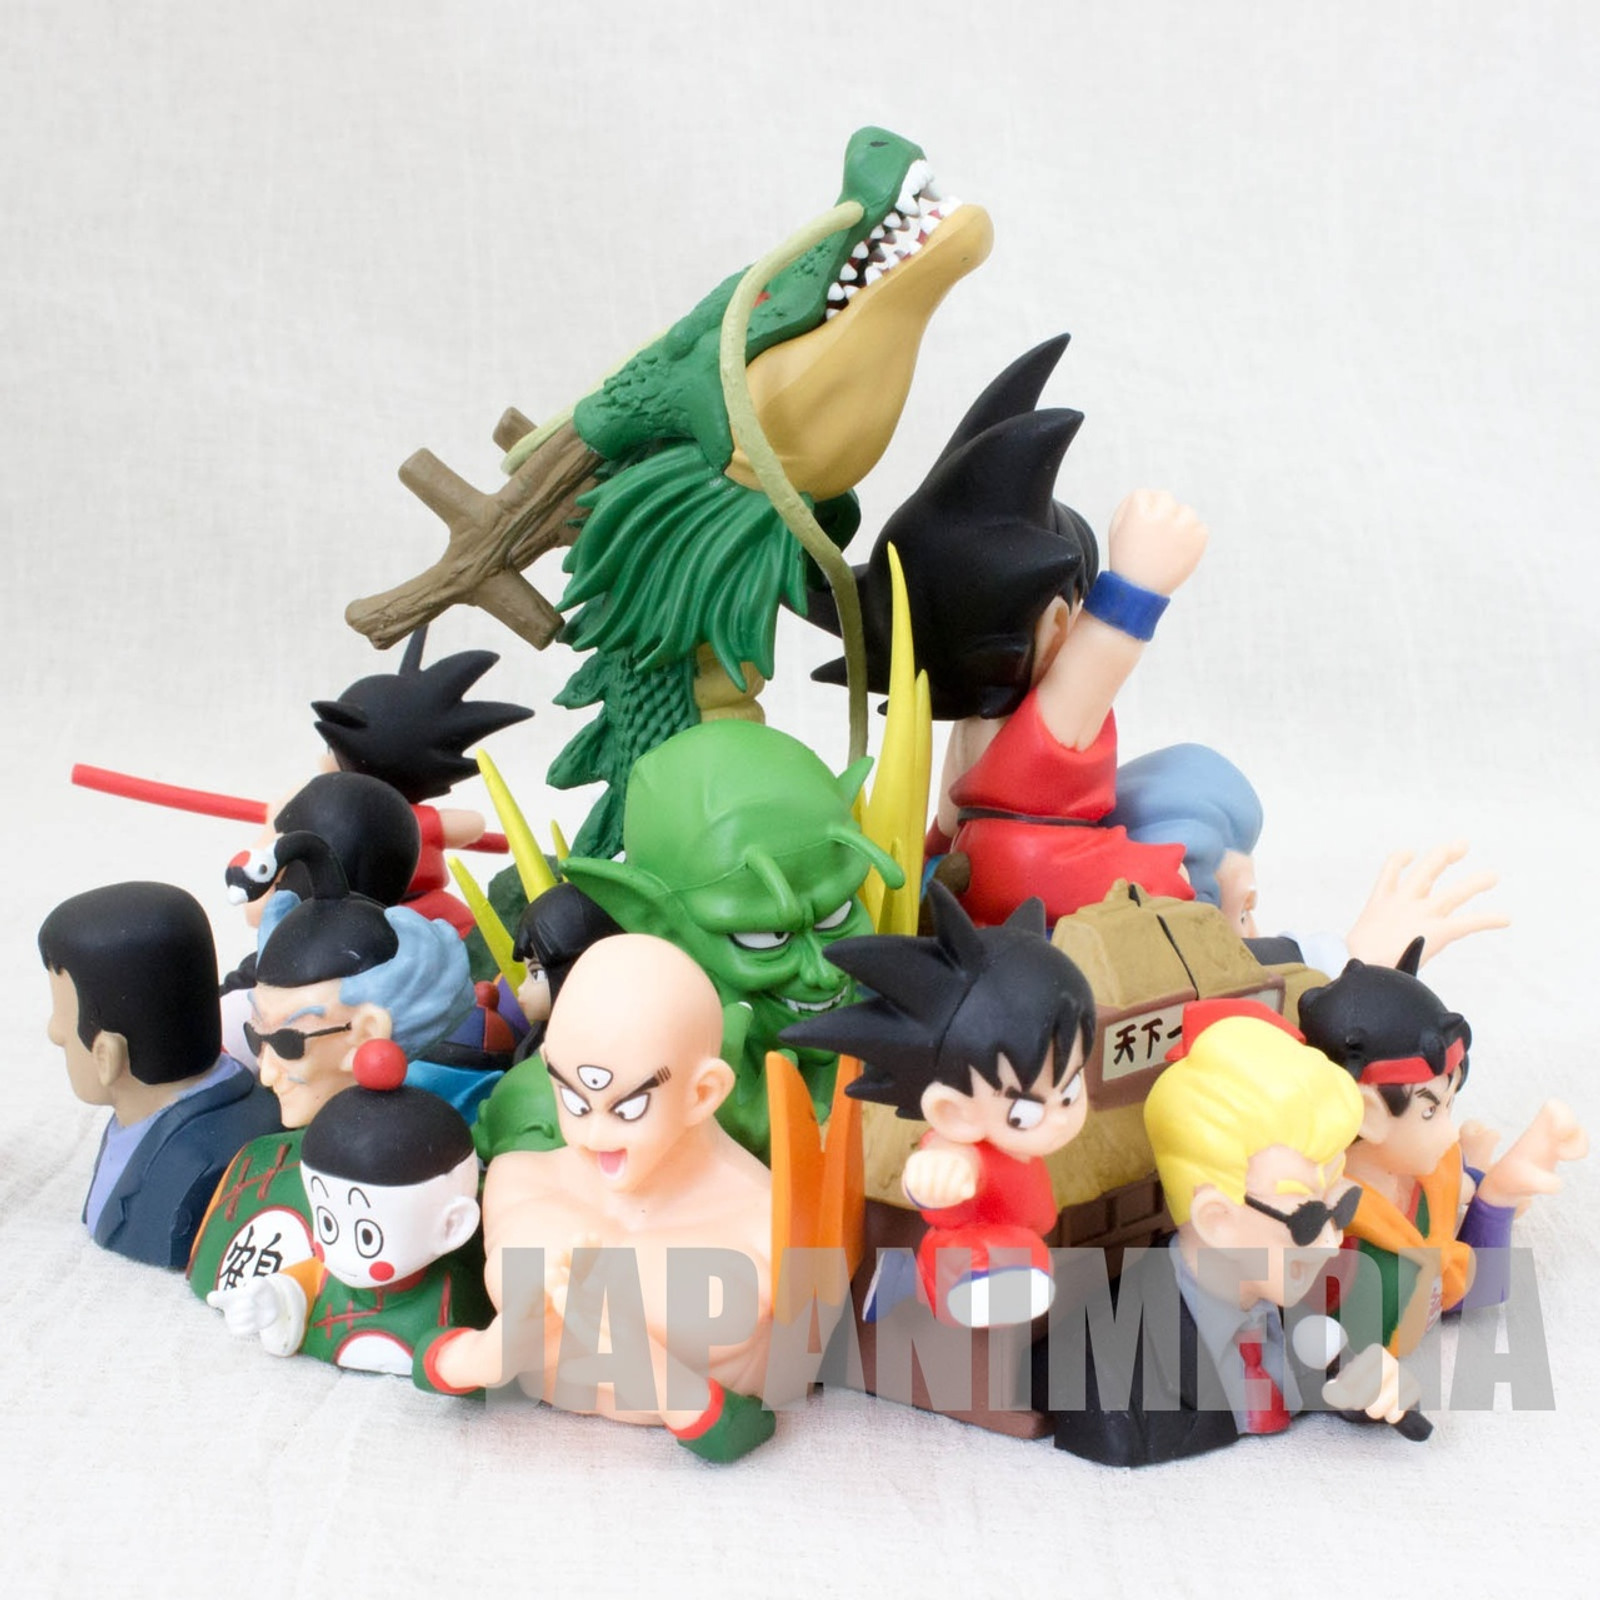 Complete set of Dragon Ball Historical Figure Banpresto JAPAN ANIME MANGA 2